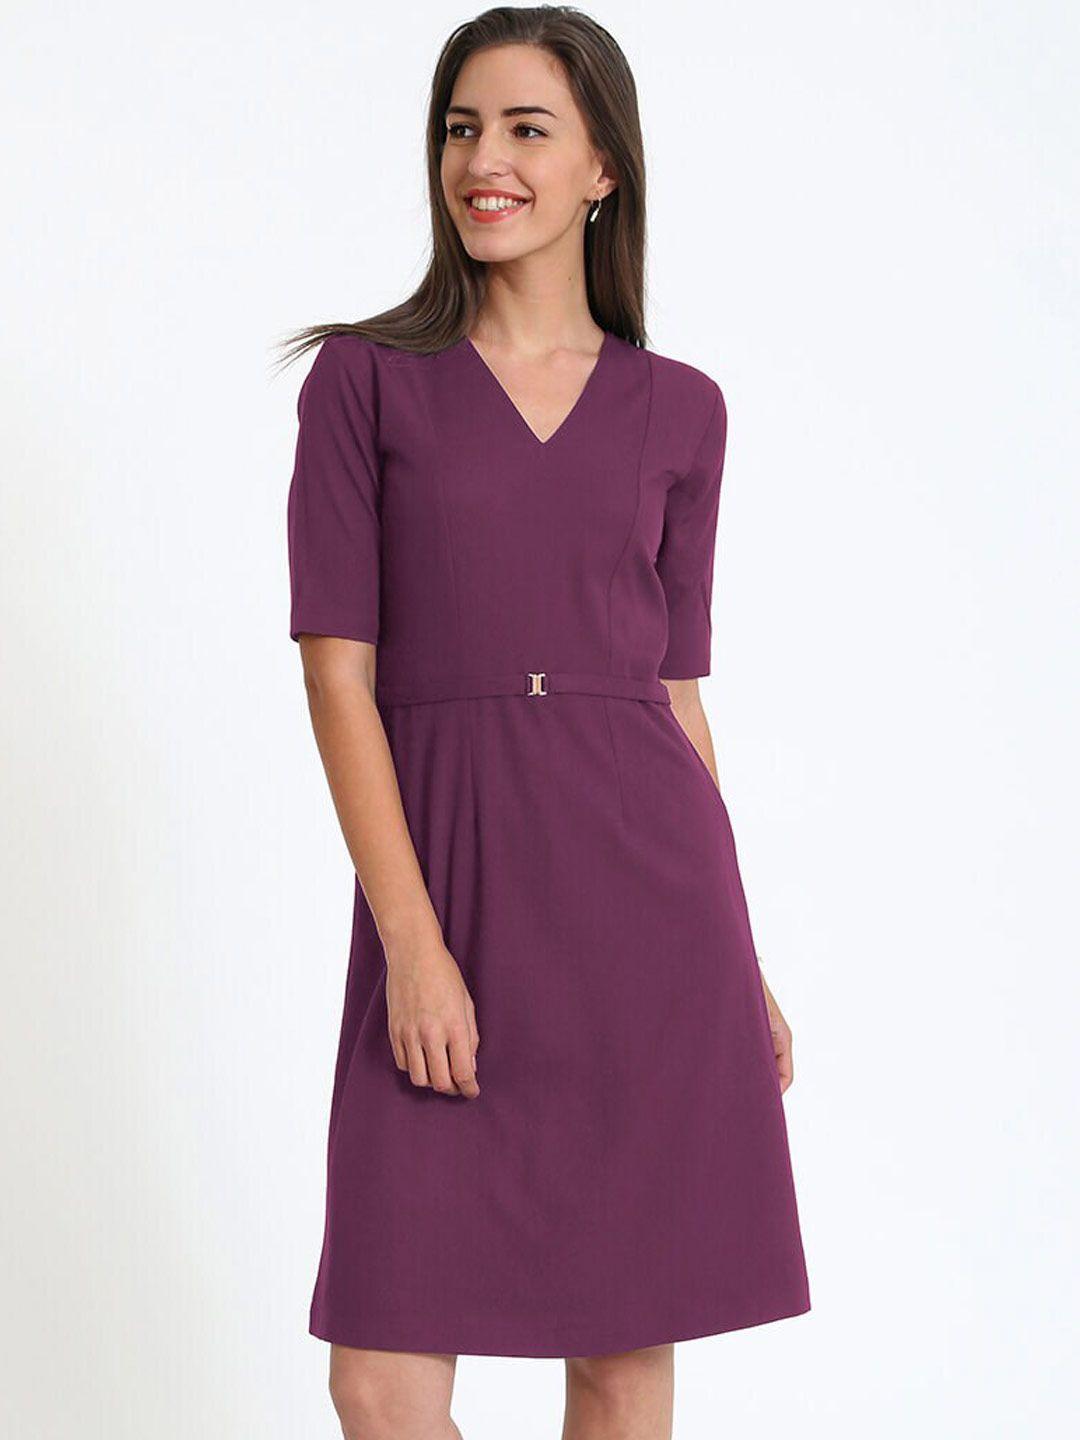 salt attire purple a-line dress